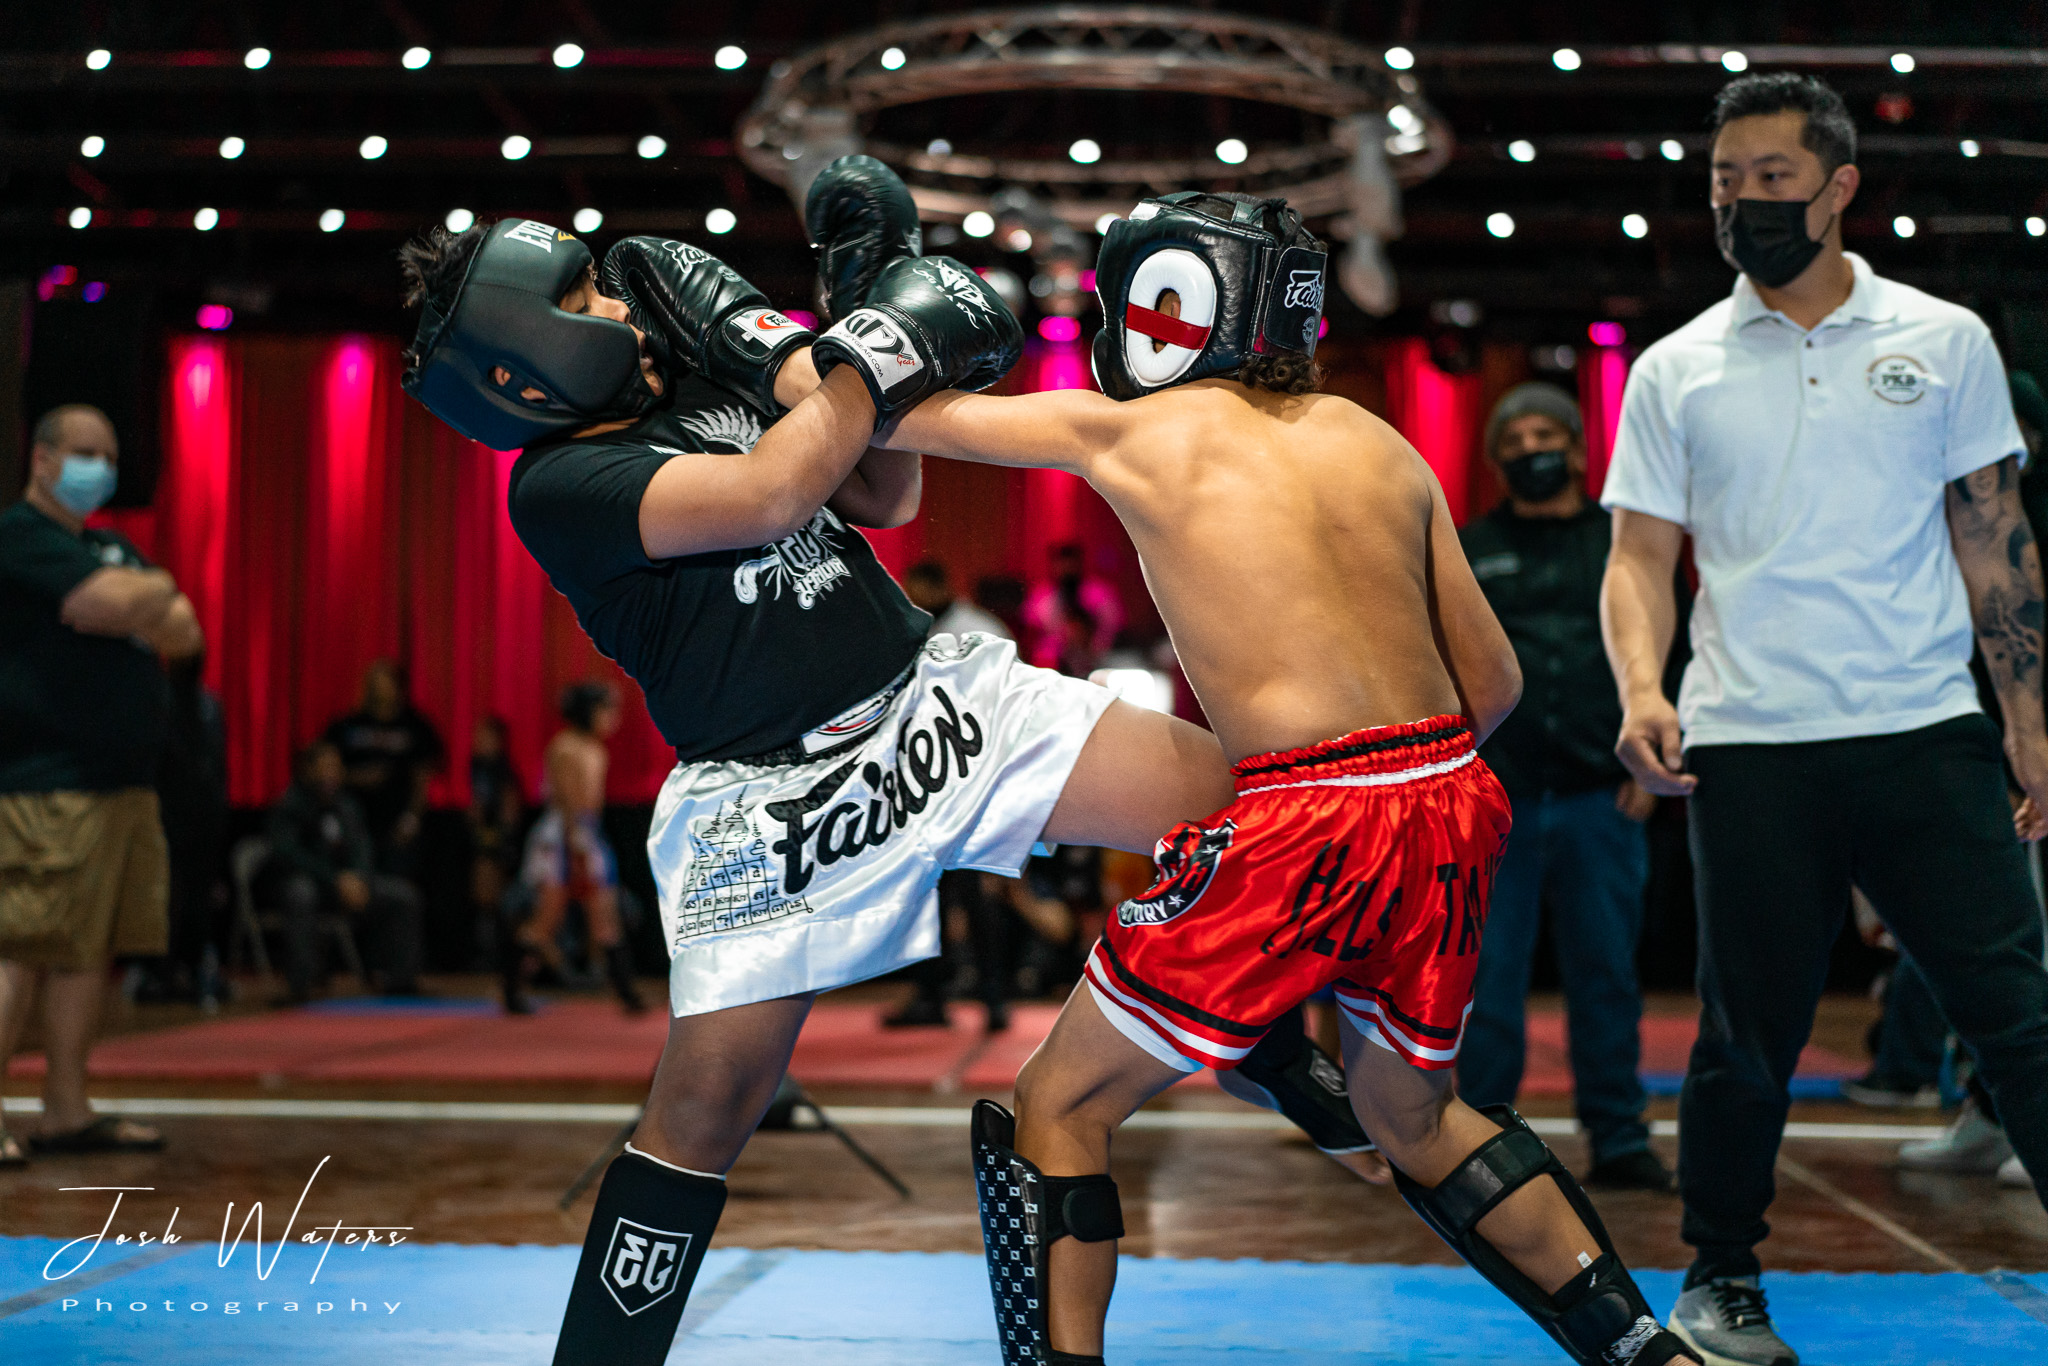 Muay Thai Tournaments Josh Waters Photography